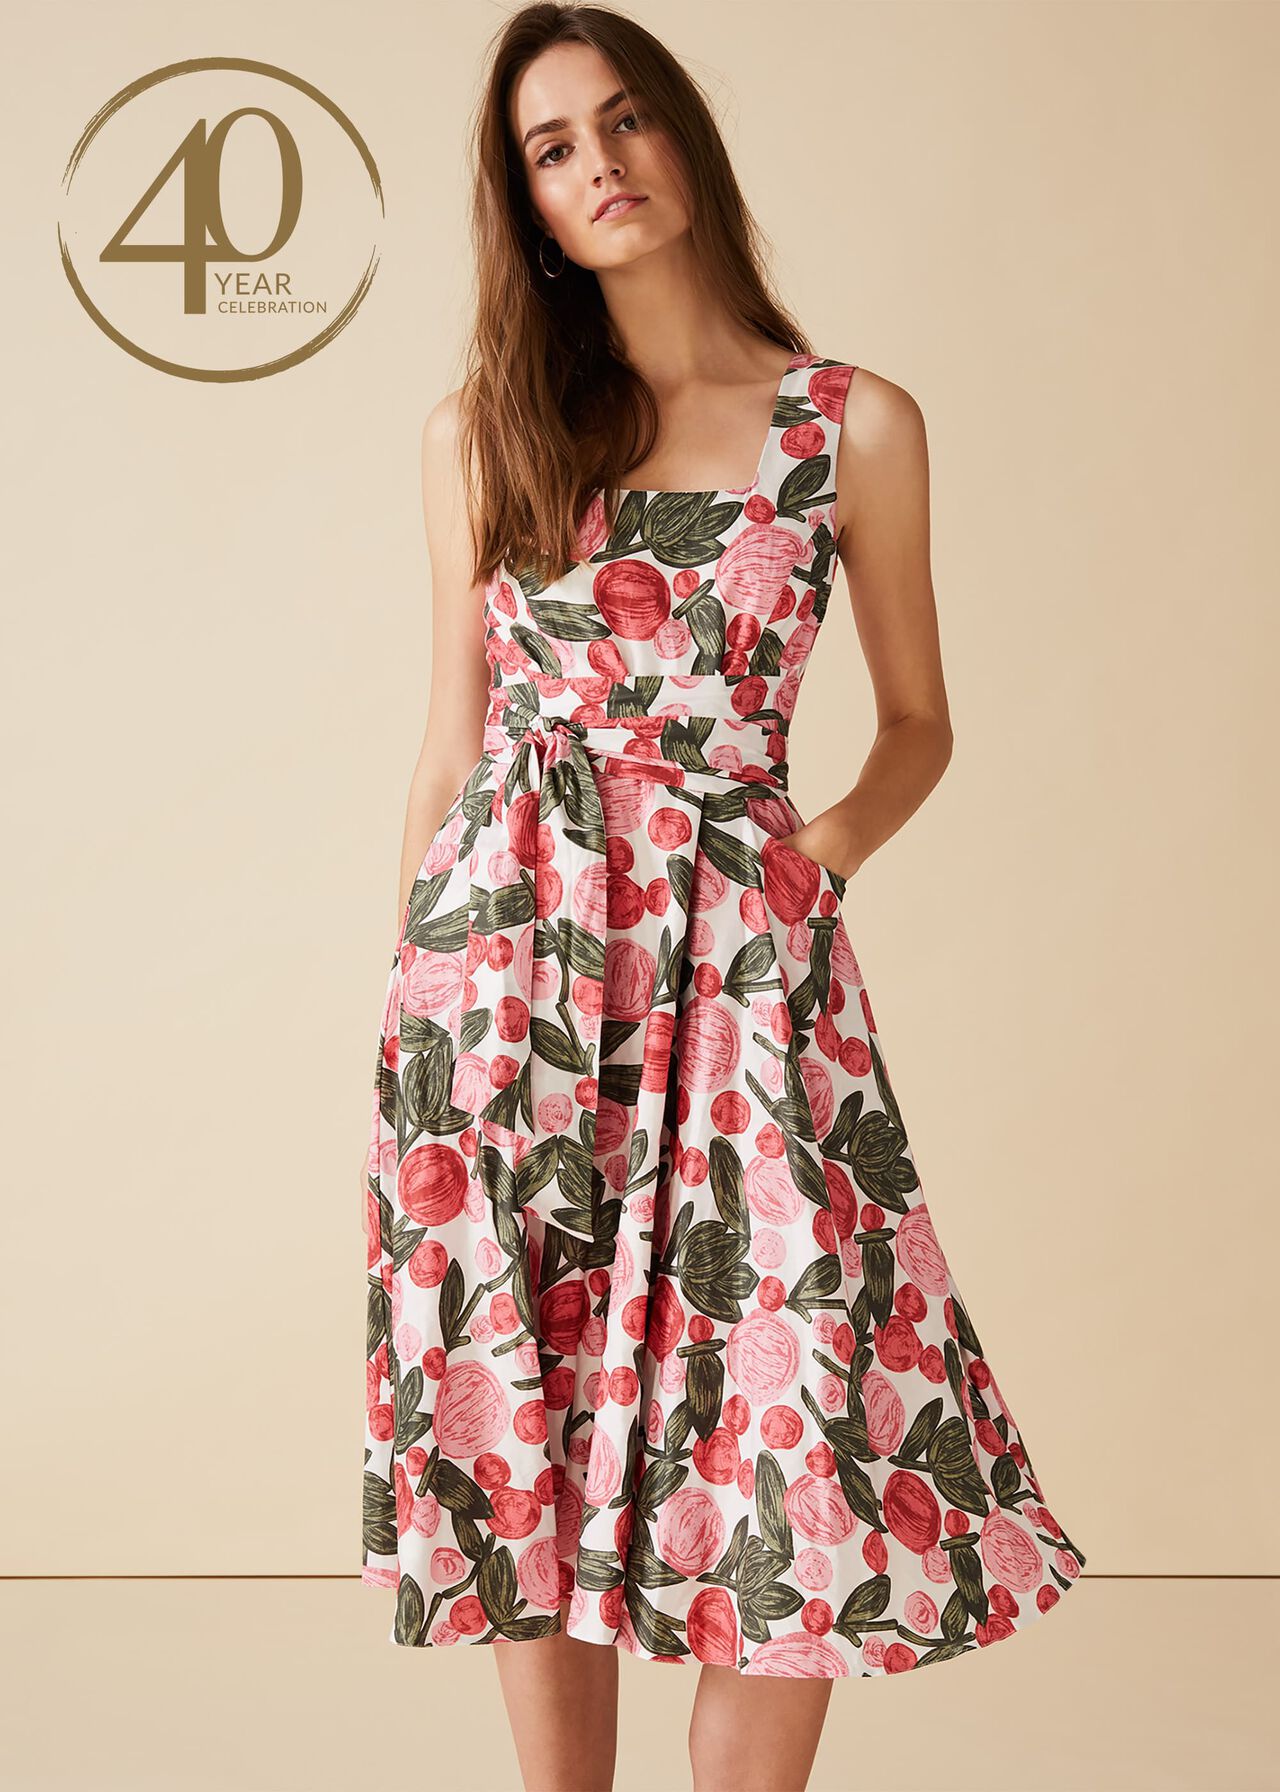 Patsy Floral Dress